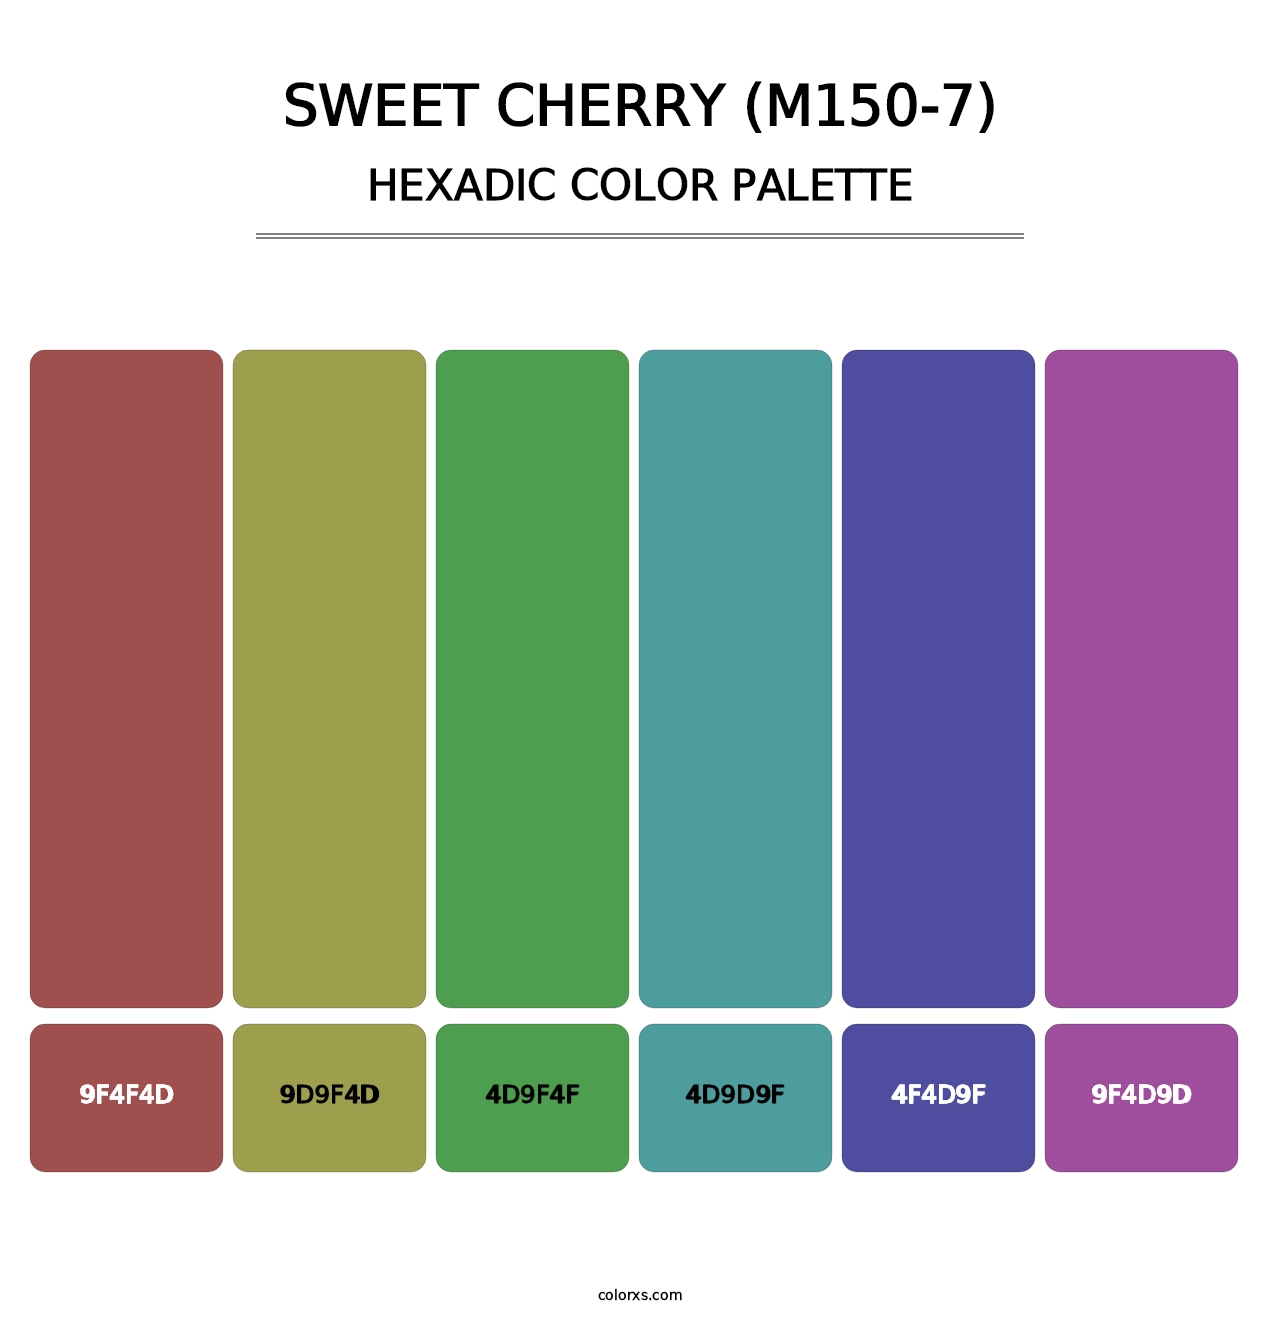 Sweet Cherry (M150-7) - Hexadic Color Palette